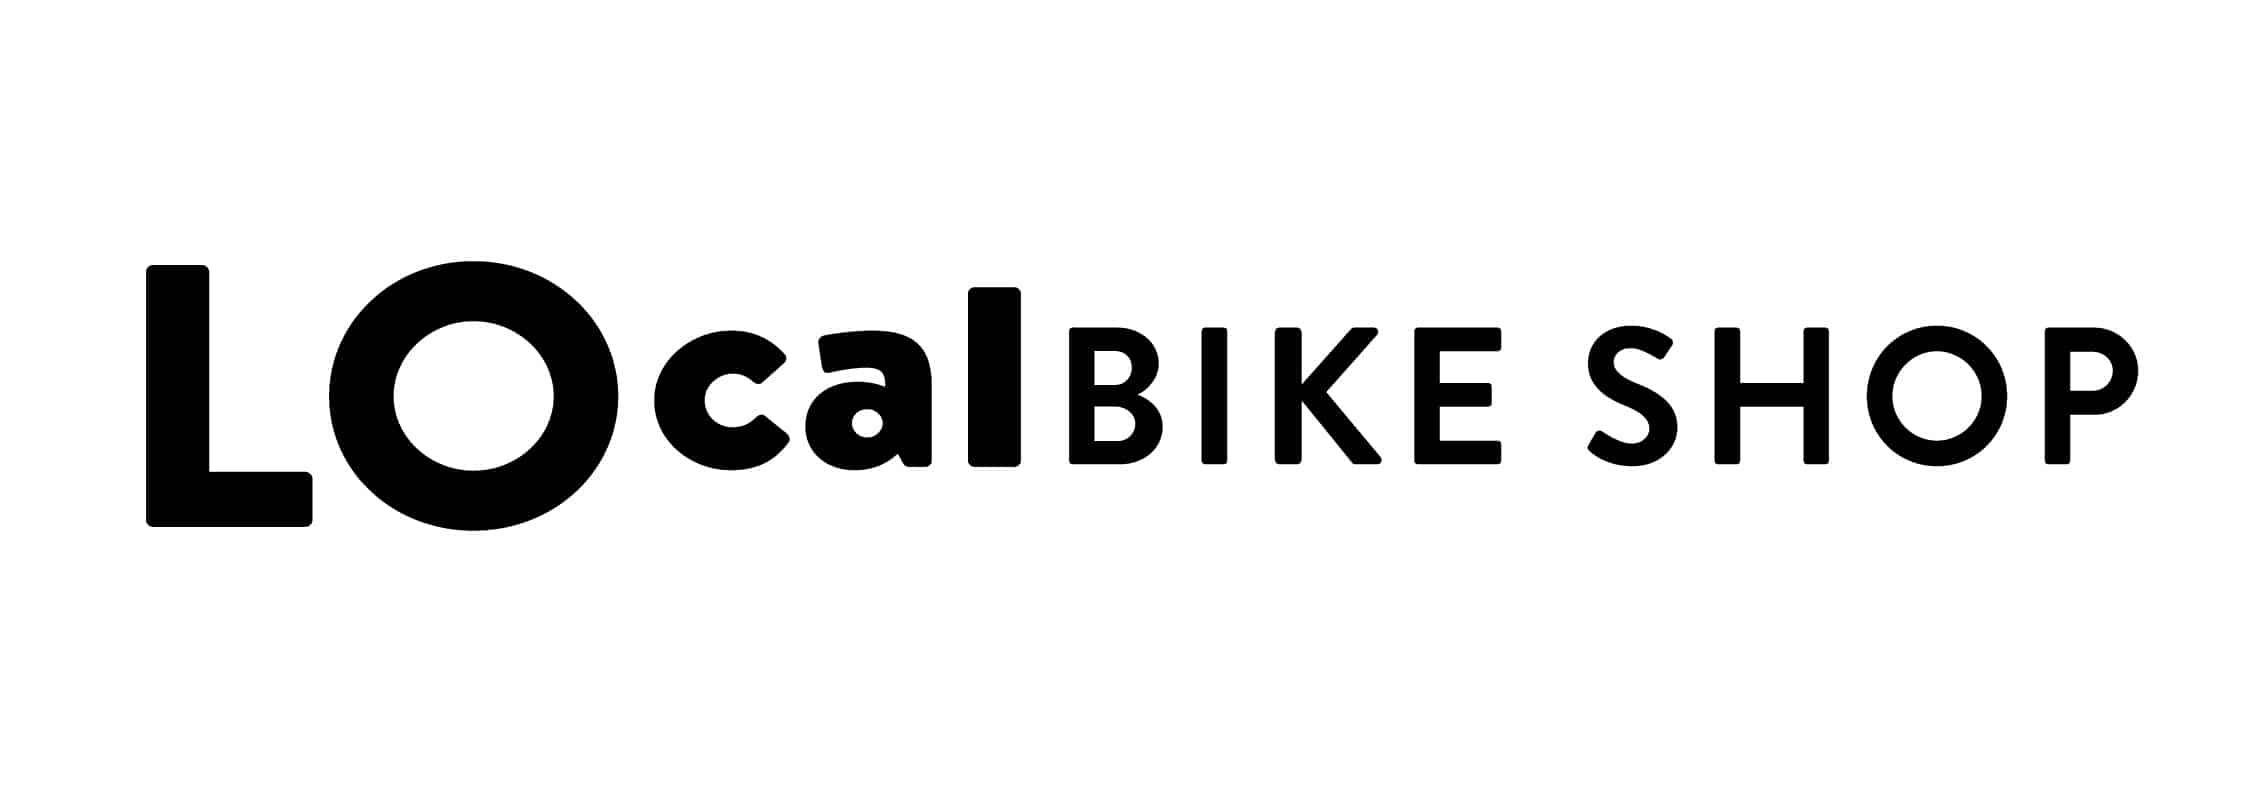 Lo Bike Shop in Los Olivos California logo design of a bike and sunset by Stellen Design Branding Agency in Los Angeles CA